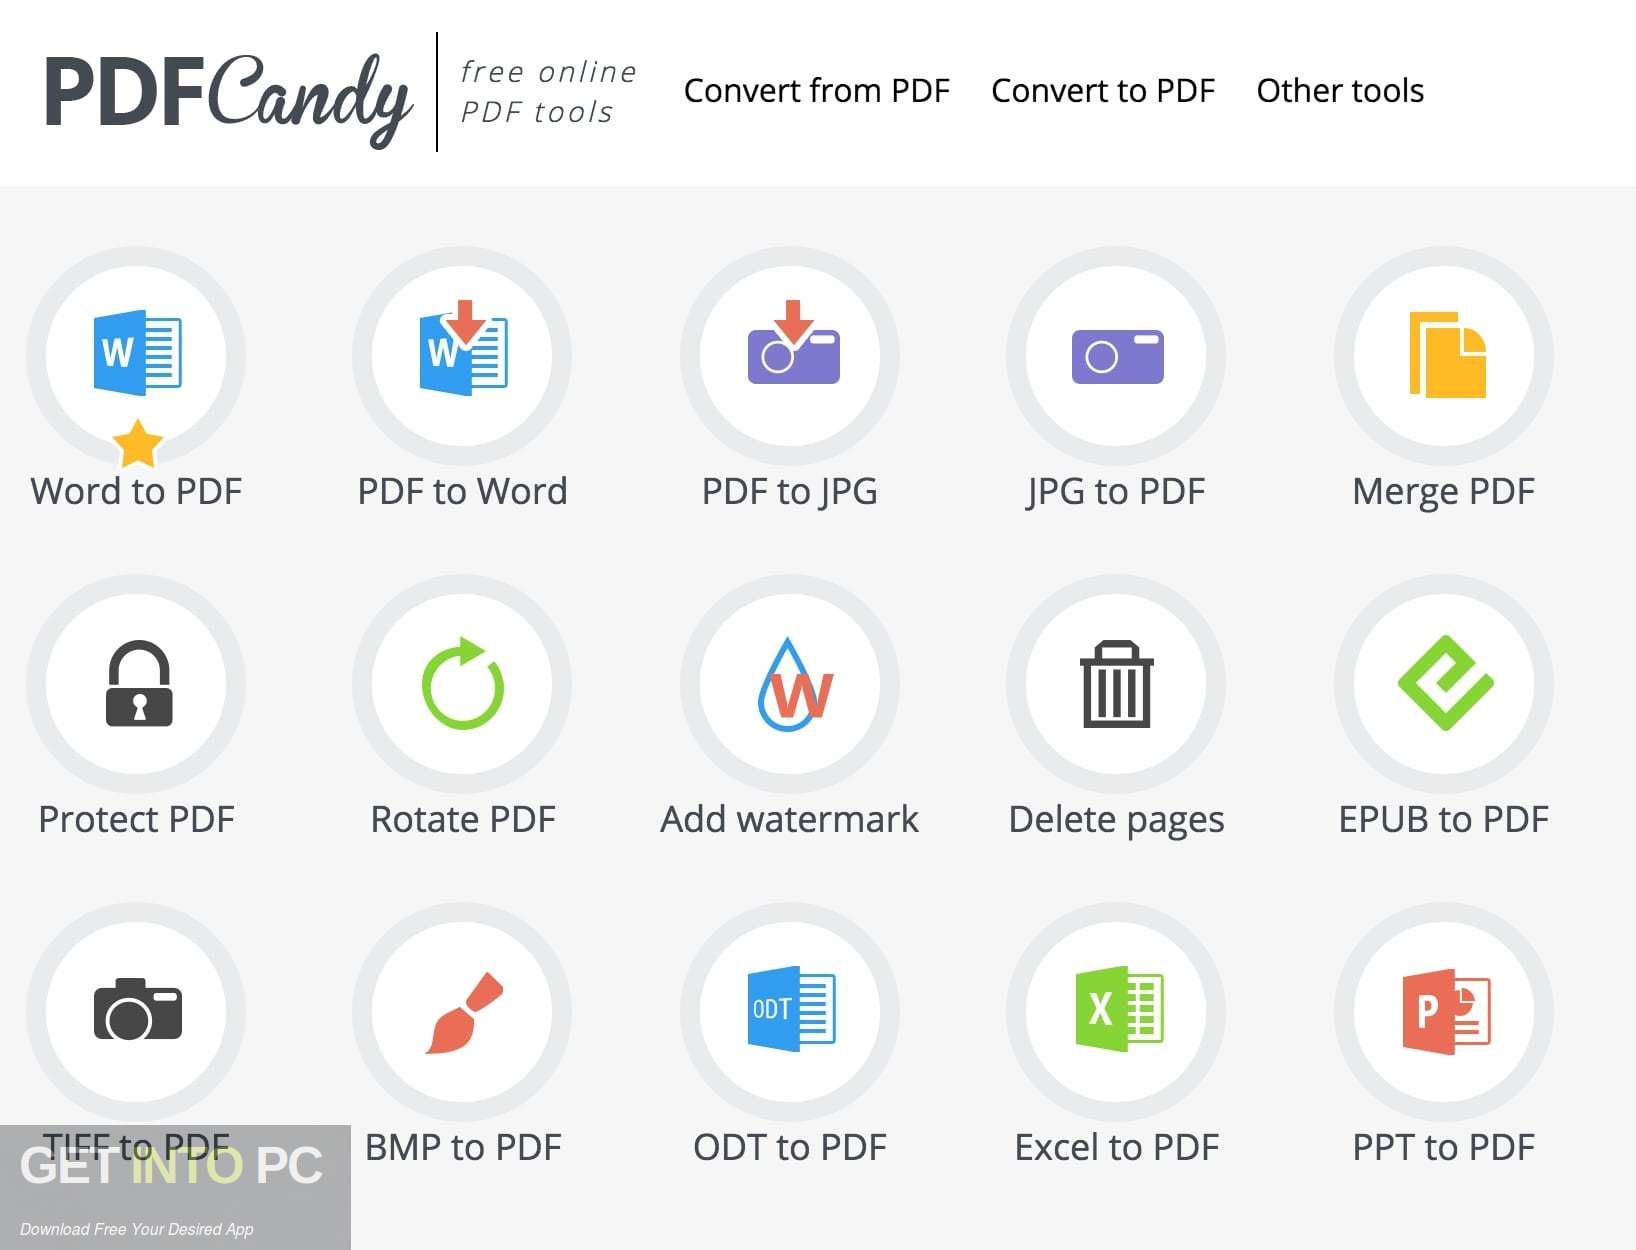 Icecream PDF Candy Desktop Latest Version Download